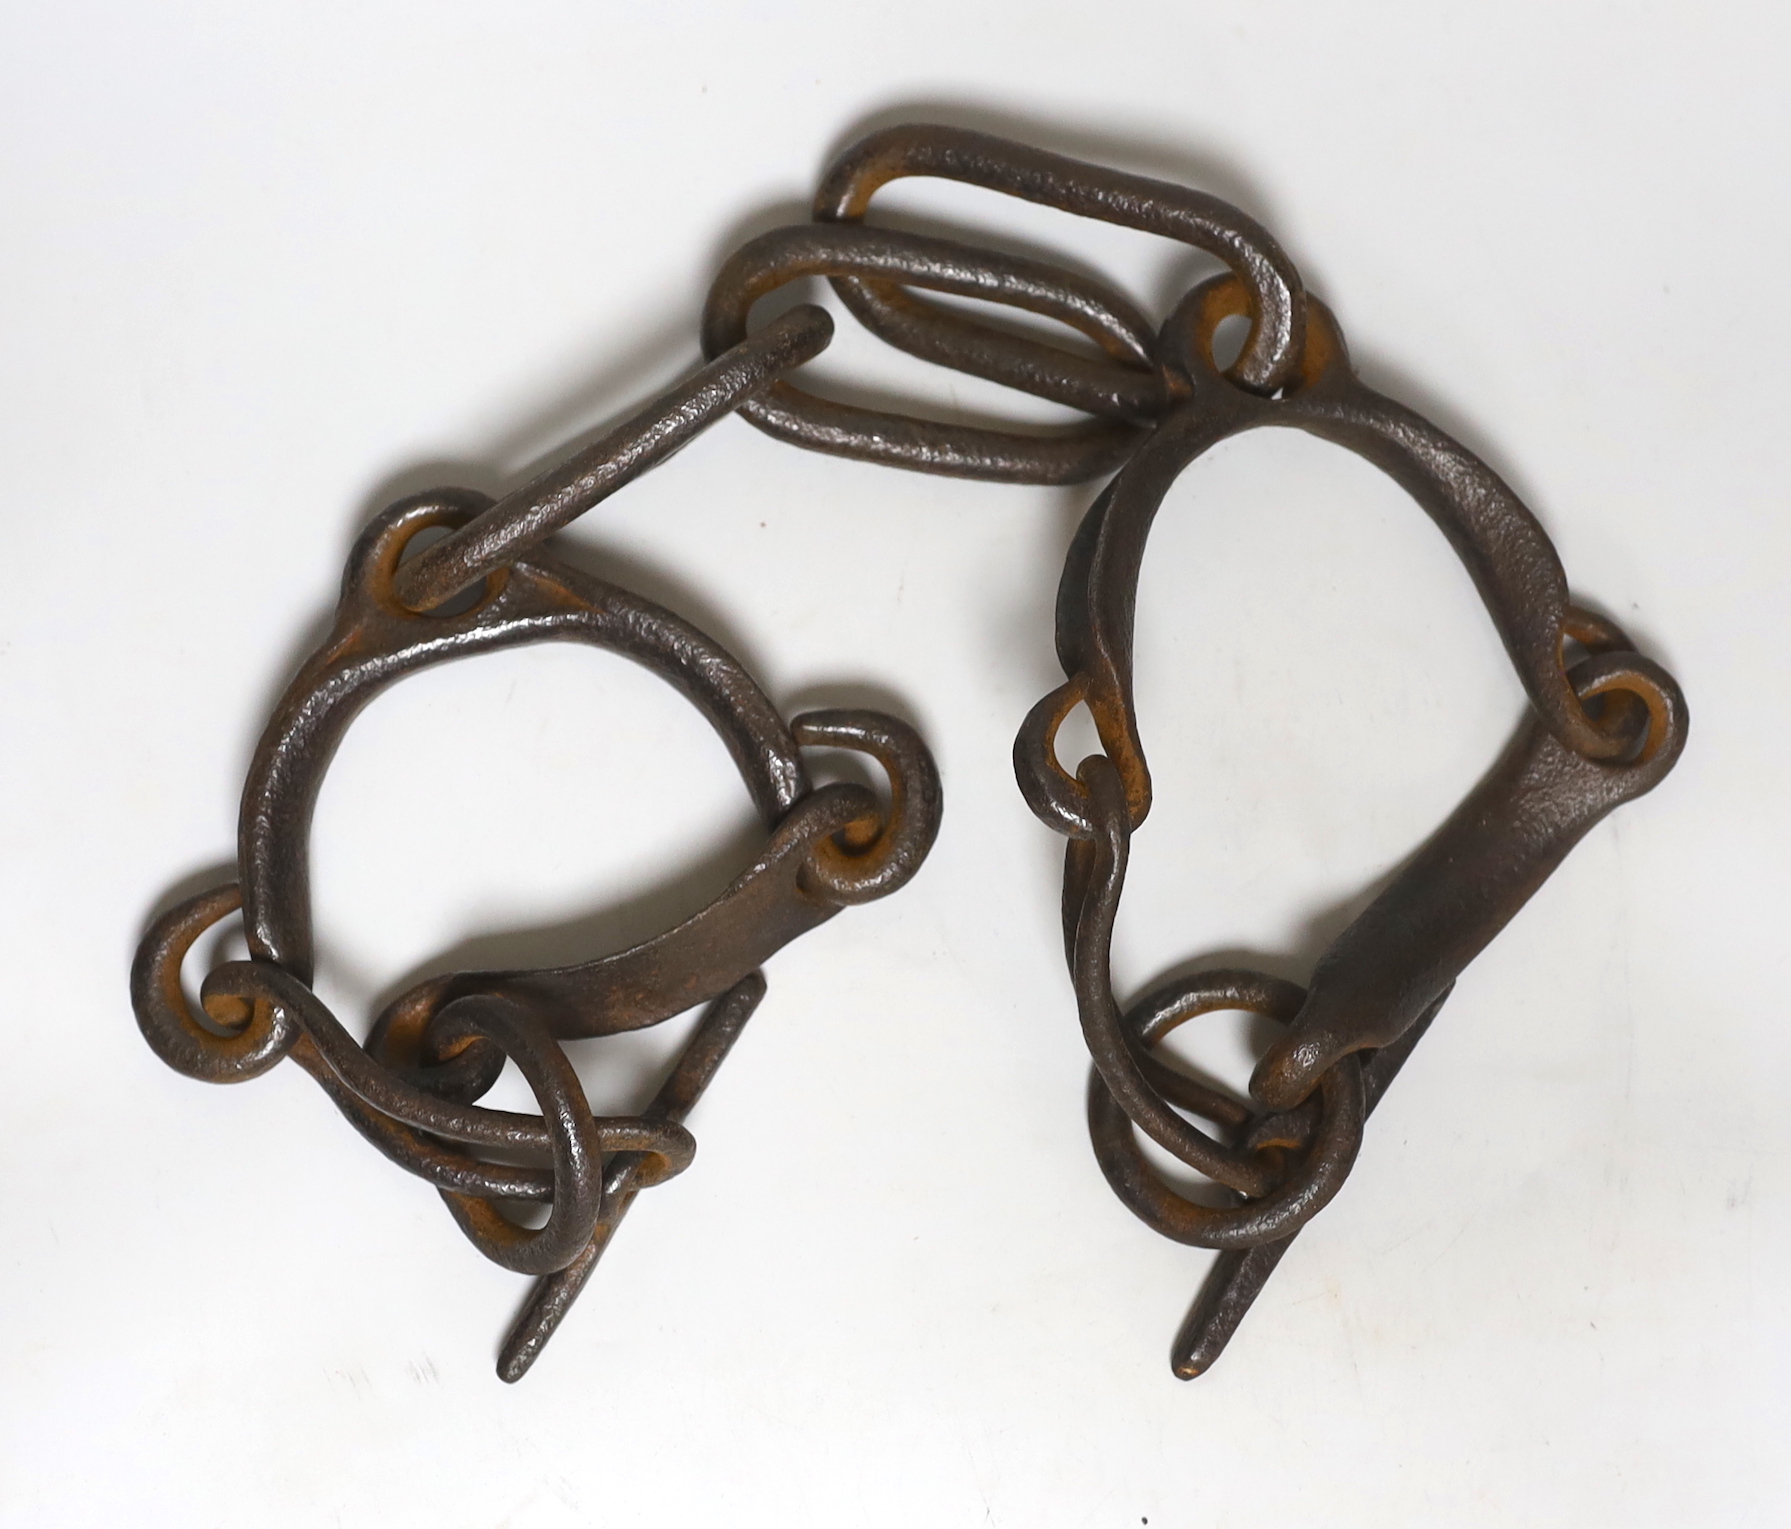 A set of iron slavery shackles, 18/19th century